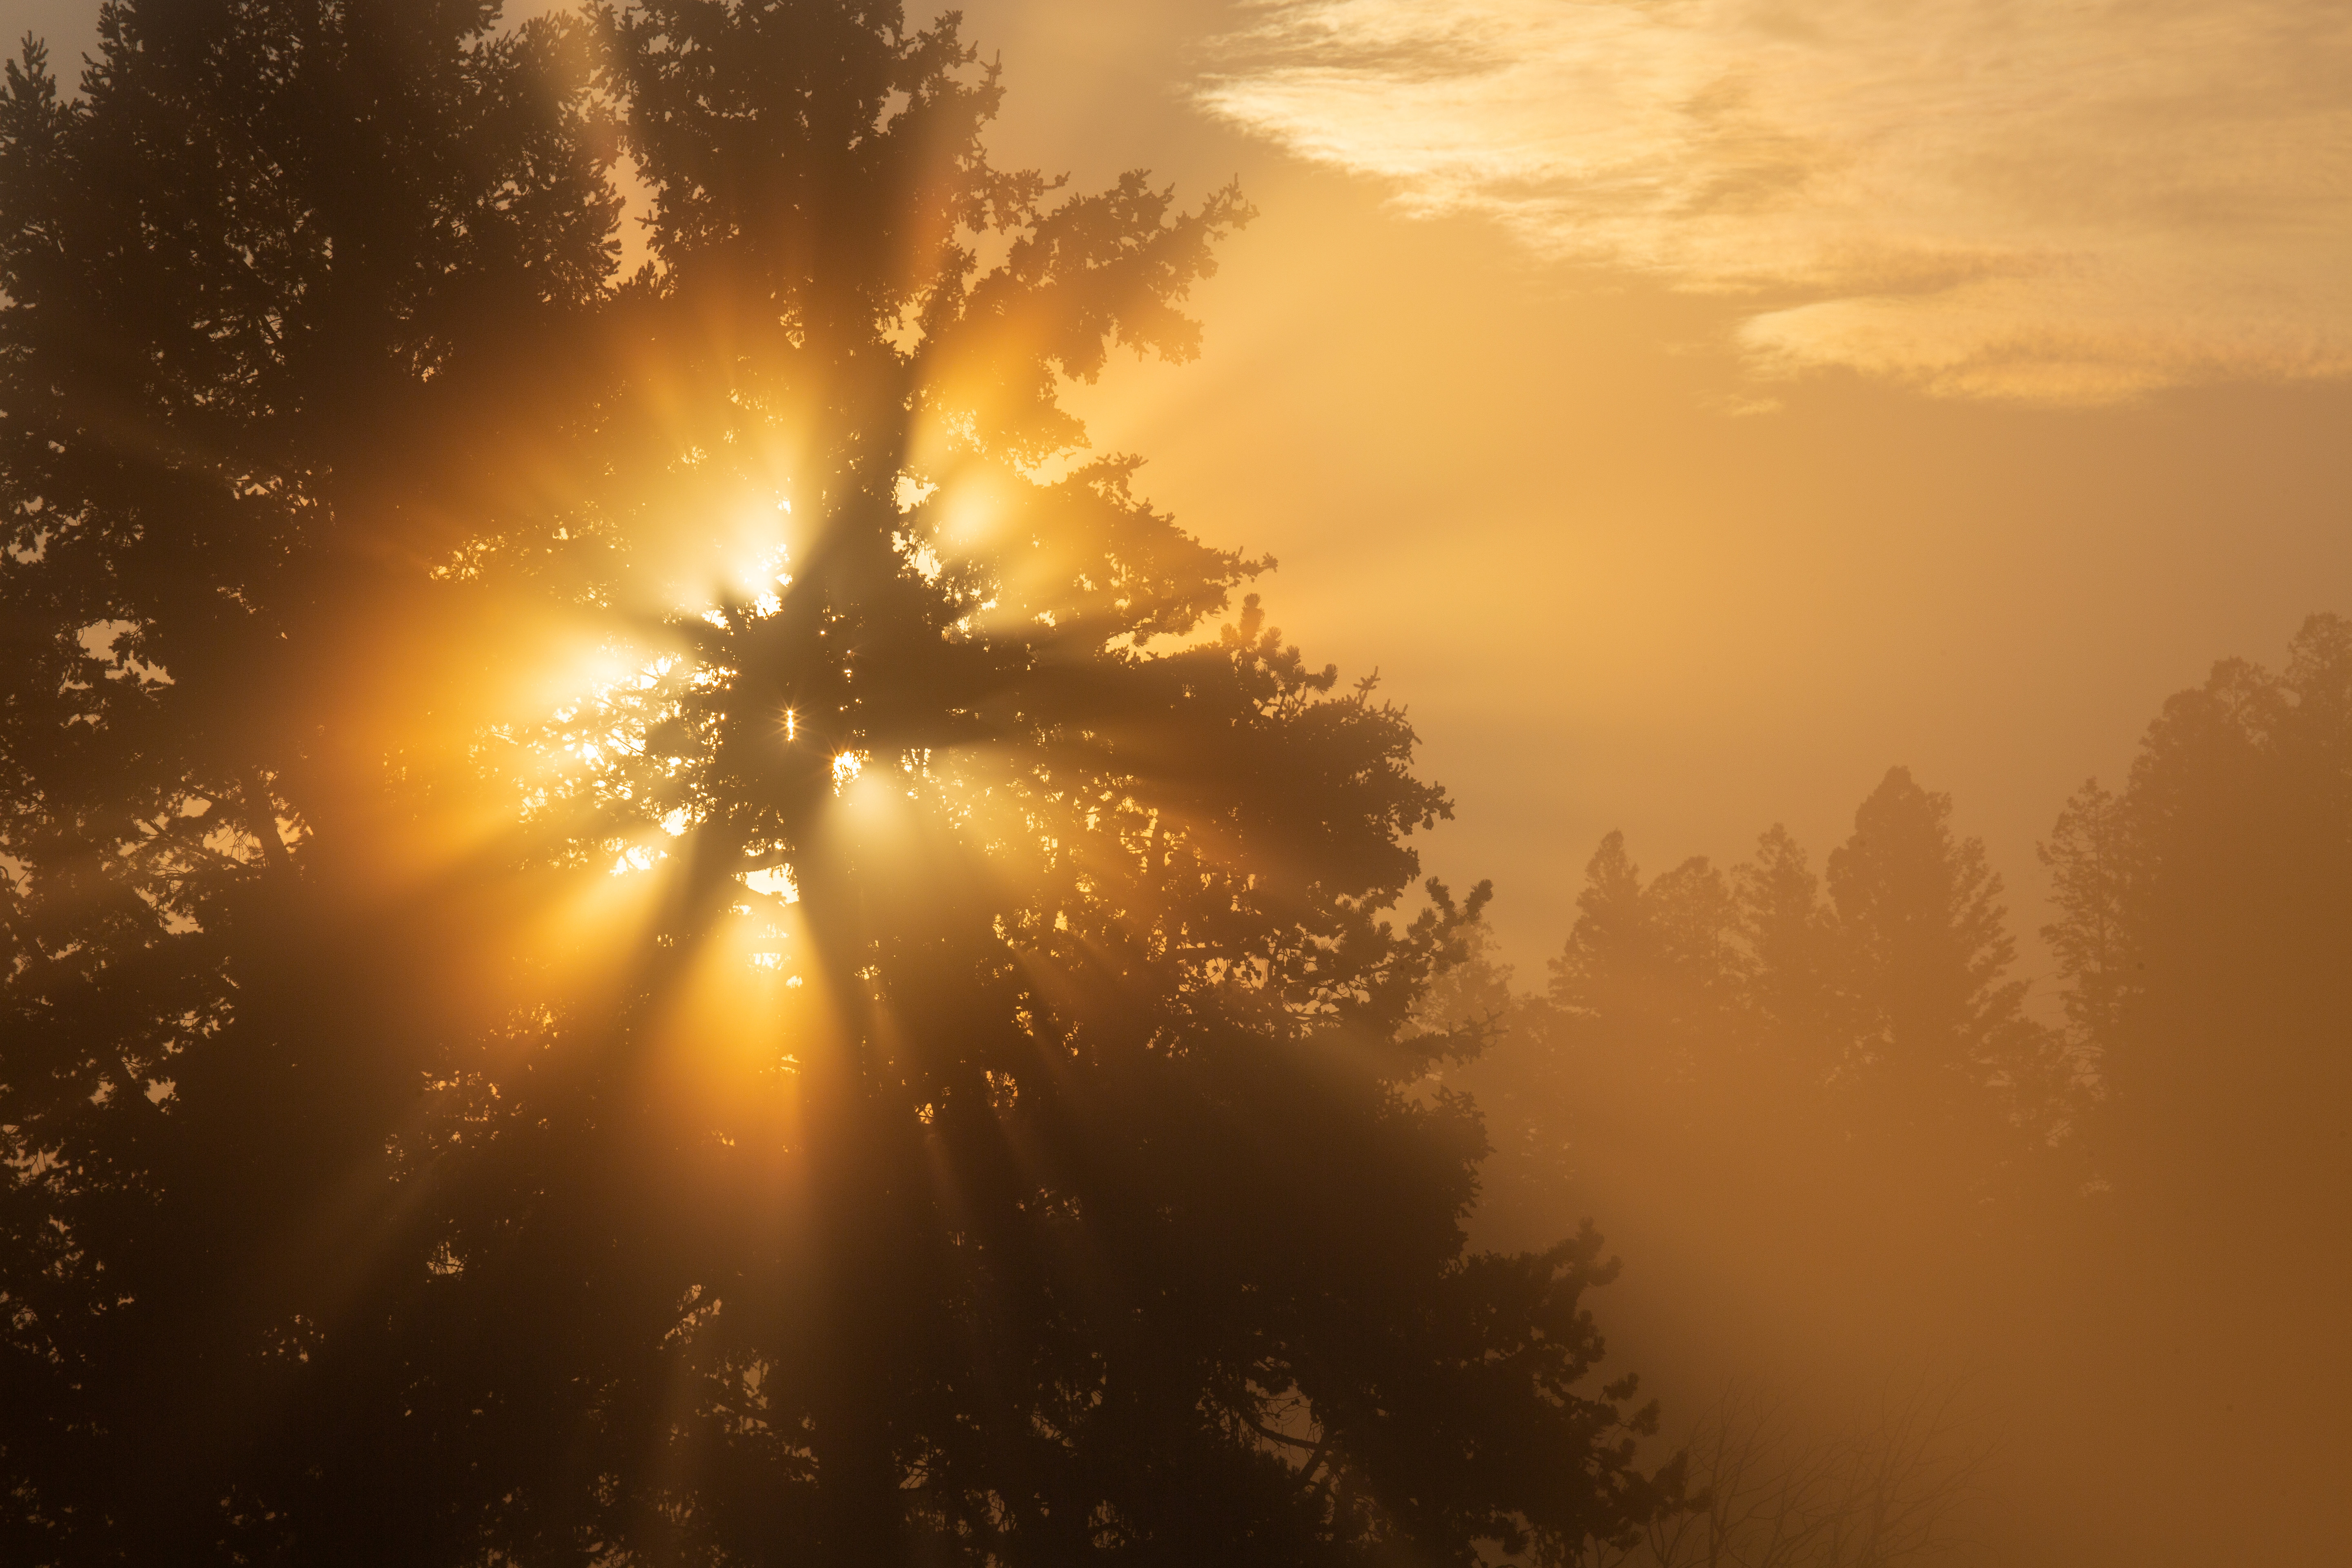 Download Foggy Yellow Sunrise image - Free stock photo - Public ...